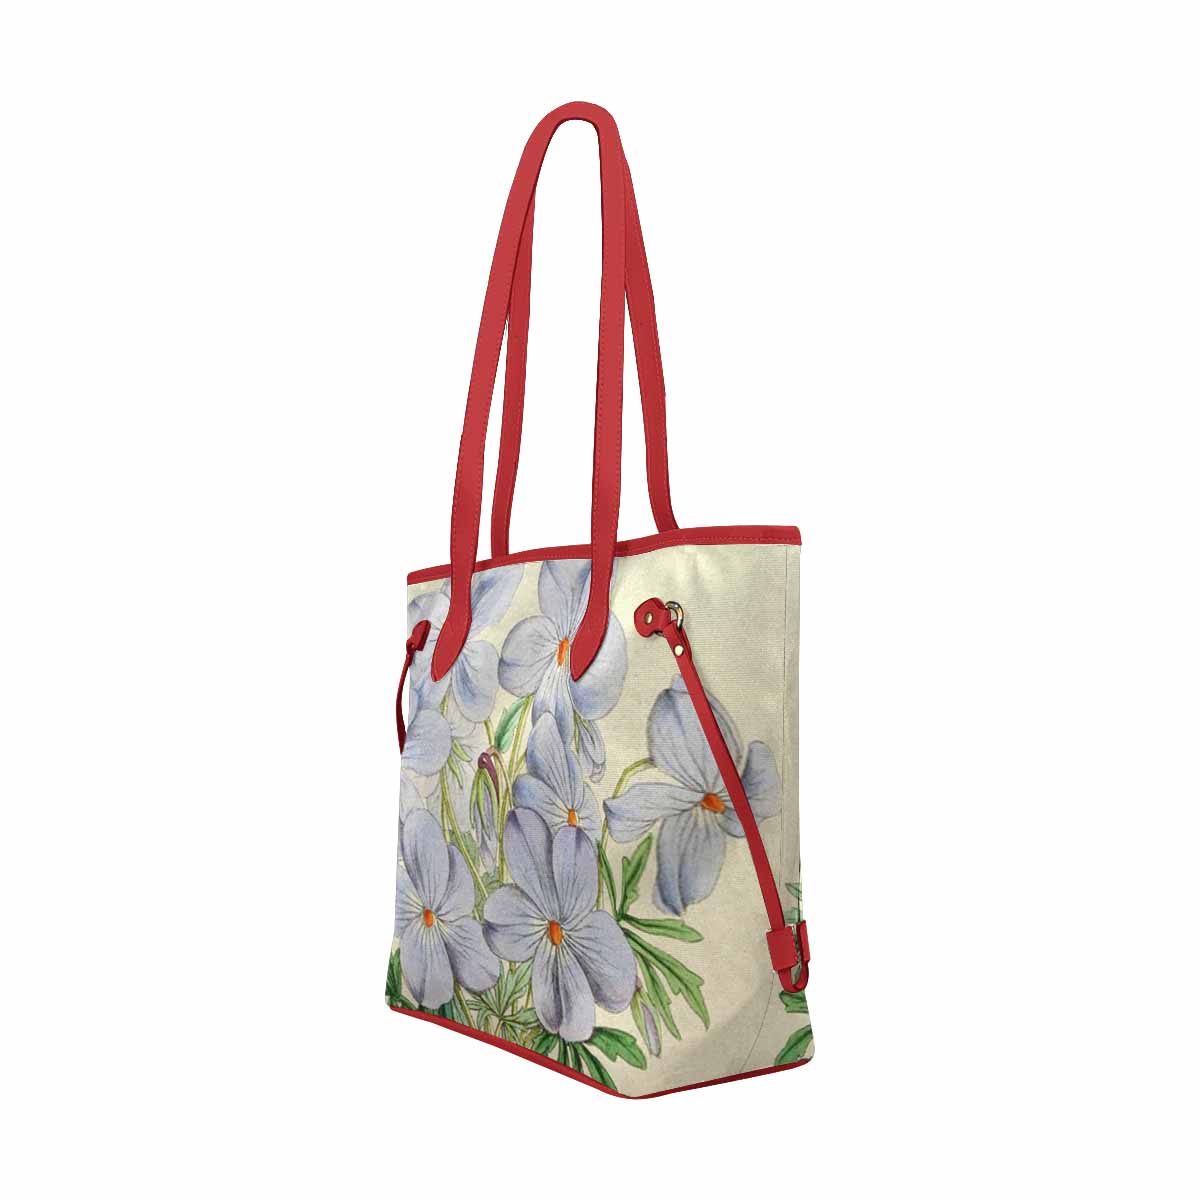 Vintage Floral Handbag, Classic Handbag, Mod 1695361 Design 13, RED TRIM